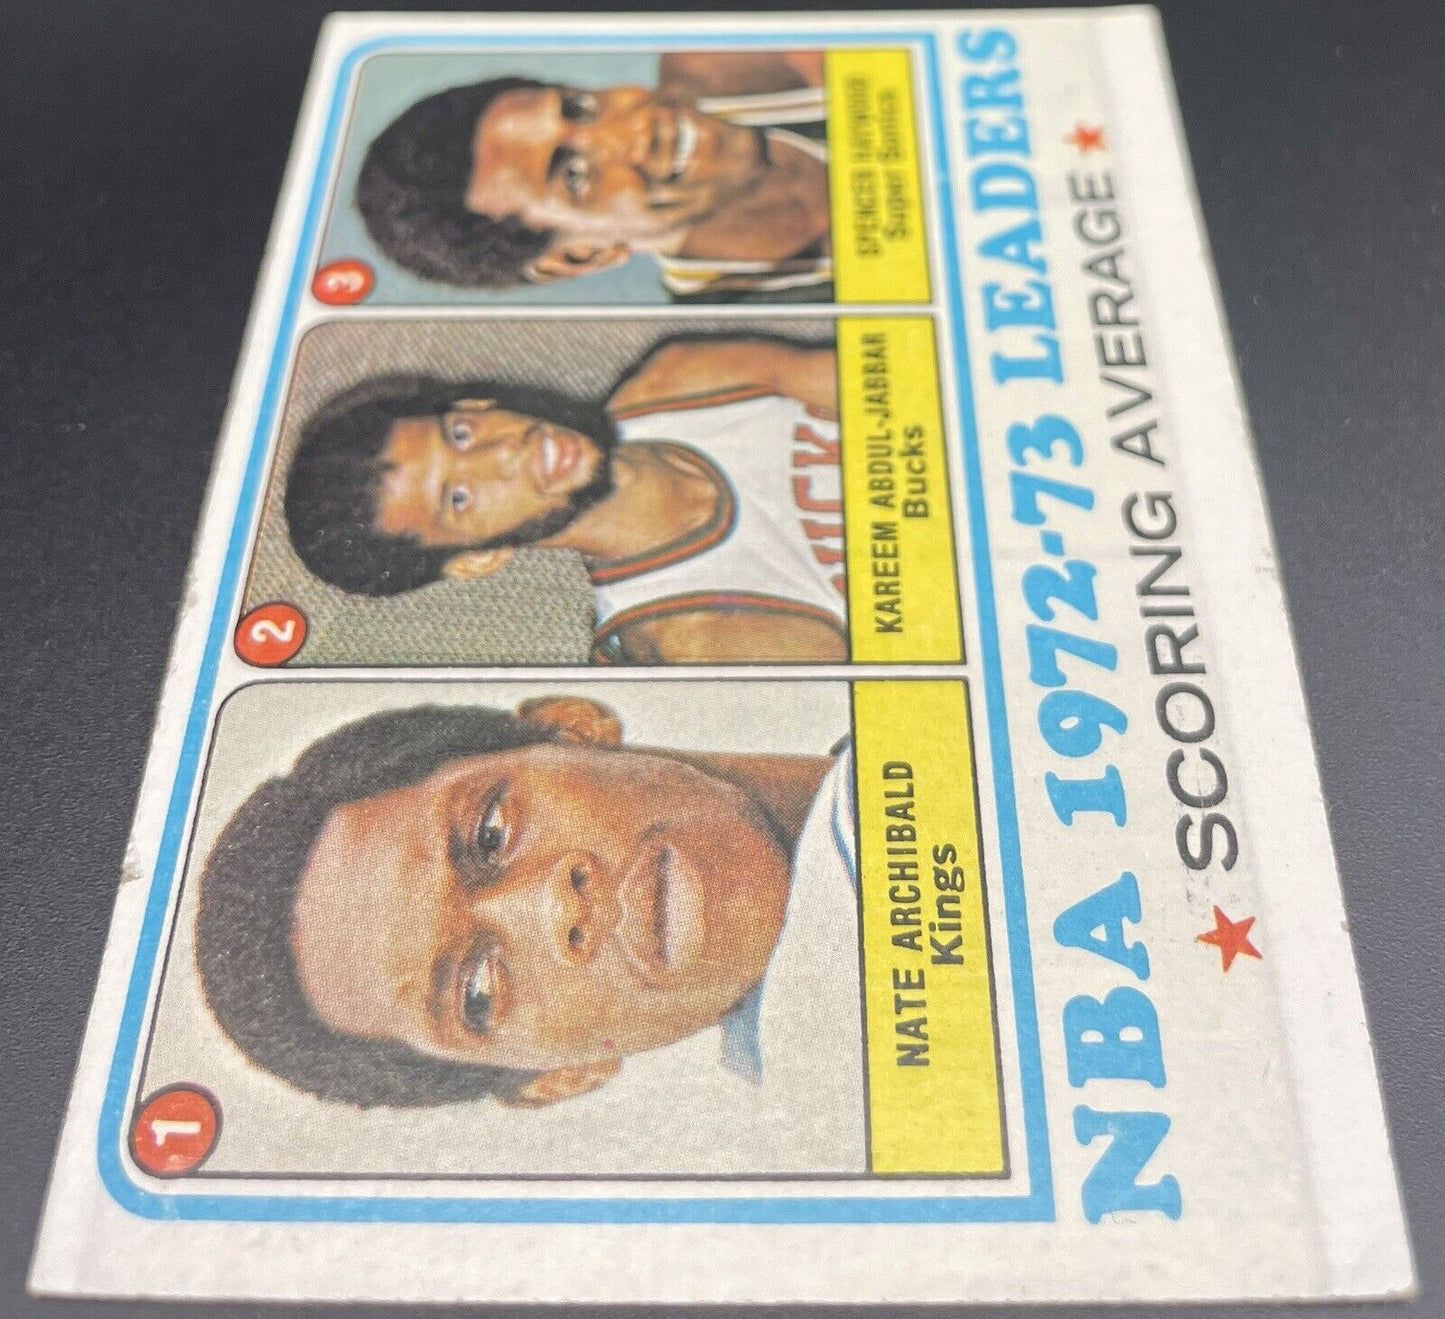 Nate Archibald, Kareem Abdul-Jabbar, Spencer Haywood 1974 Topps #154 NBA 1972-73